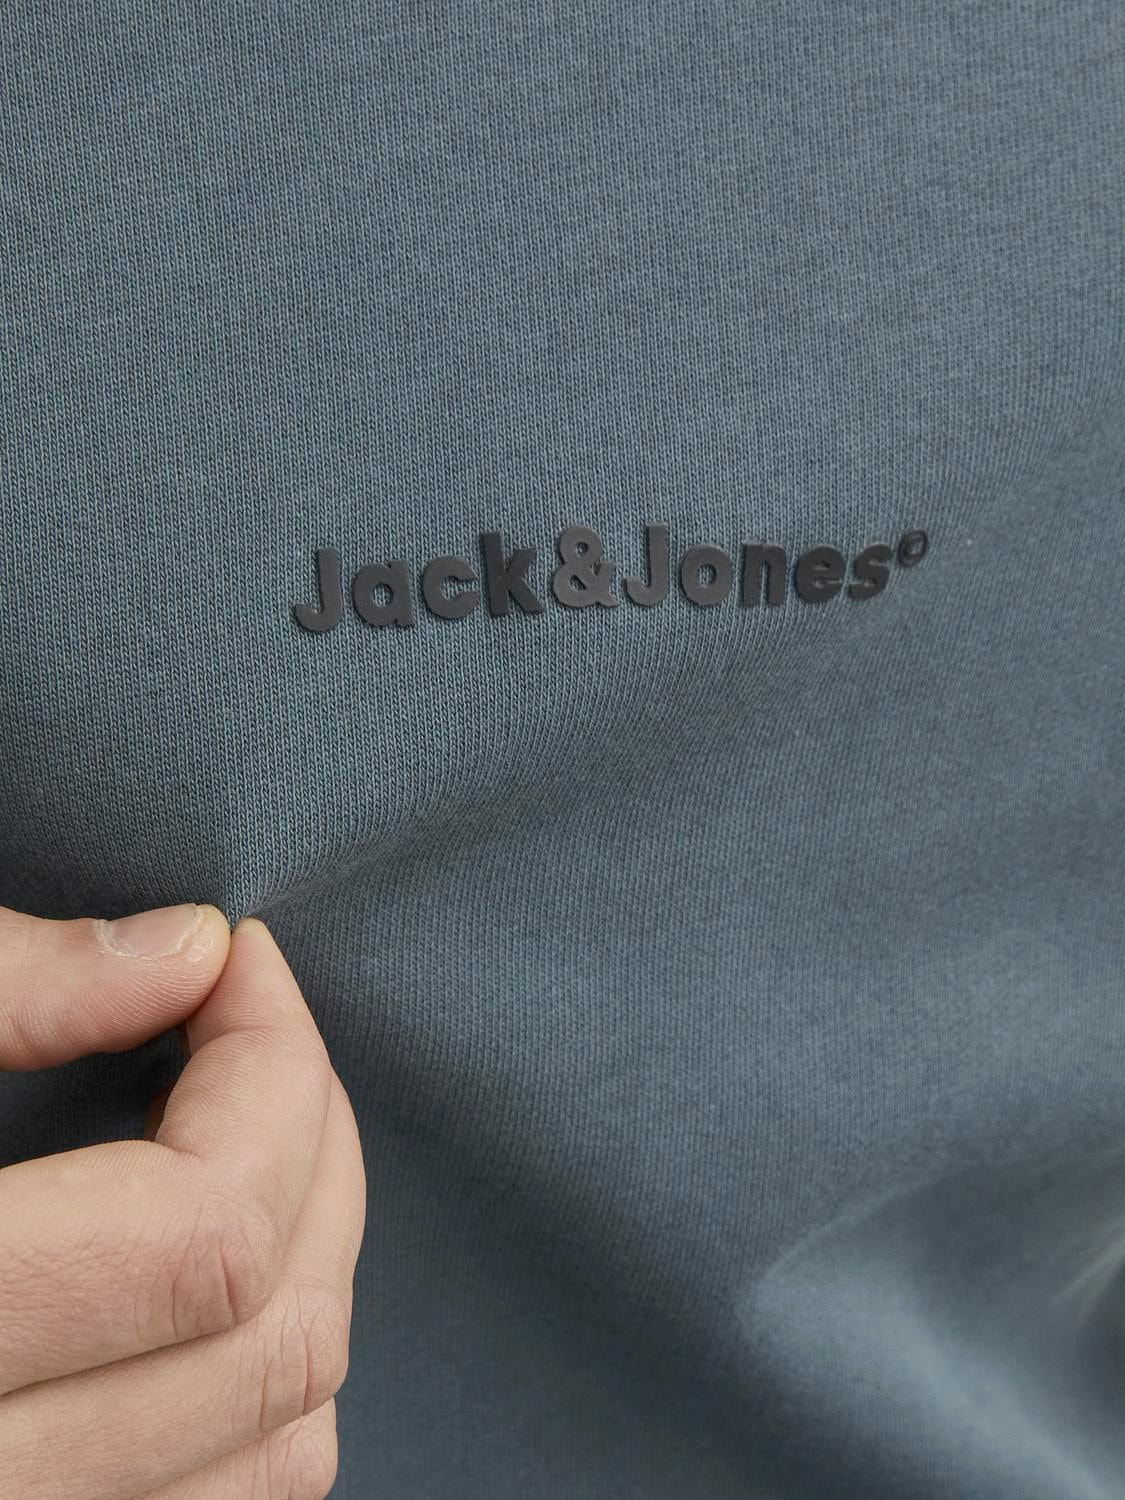 Jack & Jones Logo Crewn Neck Sweatshirt -Magical Forest - 12234185